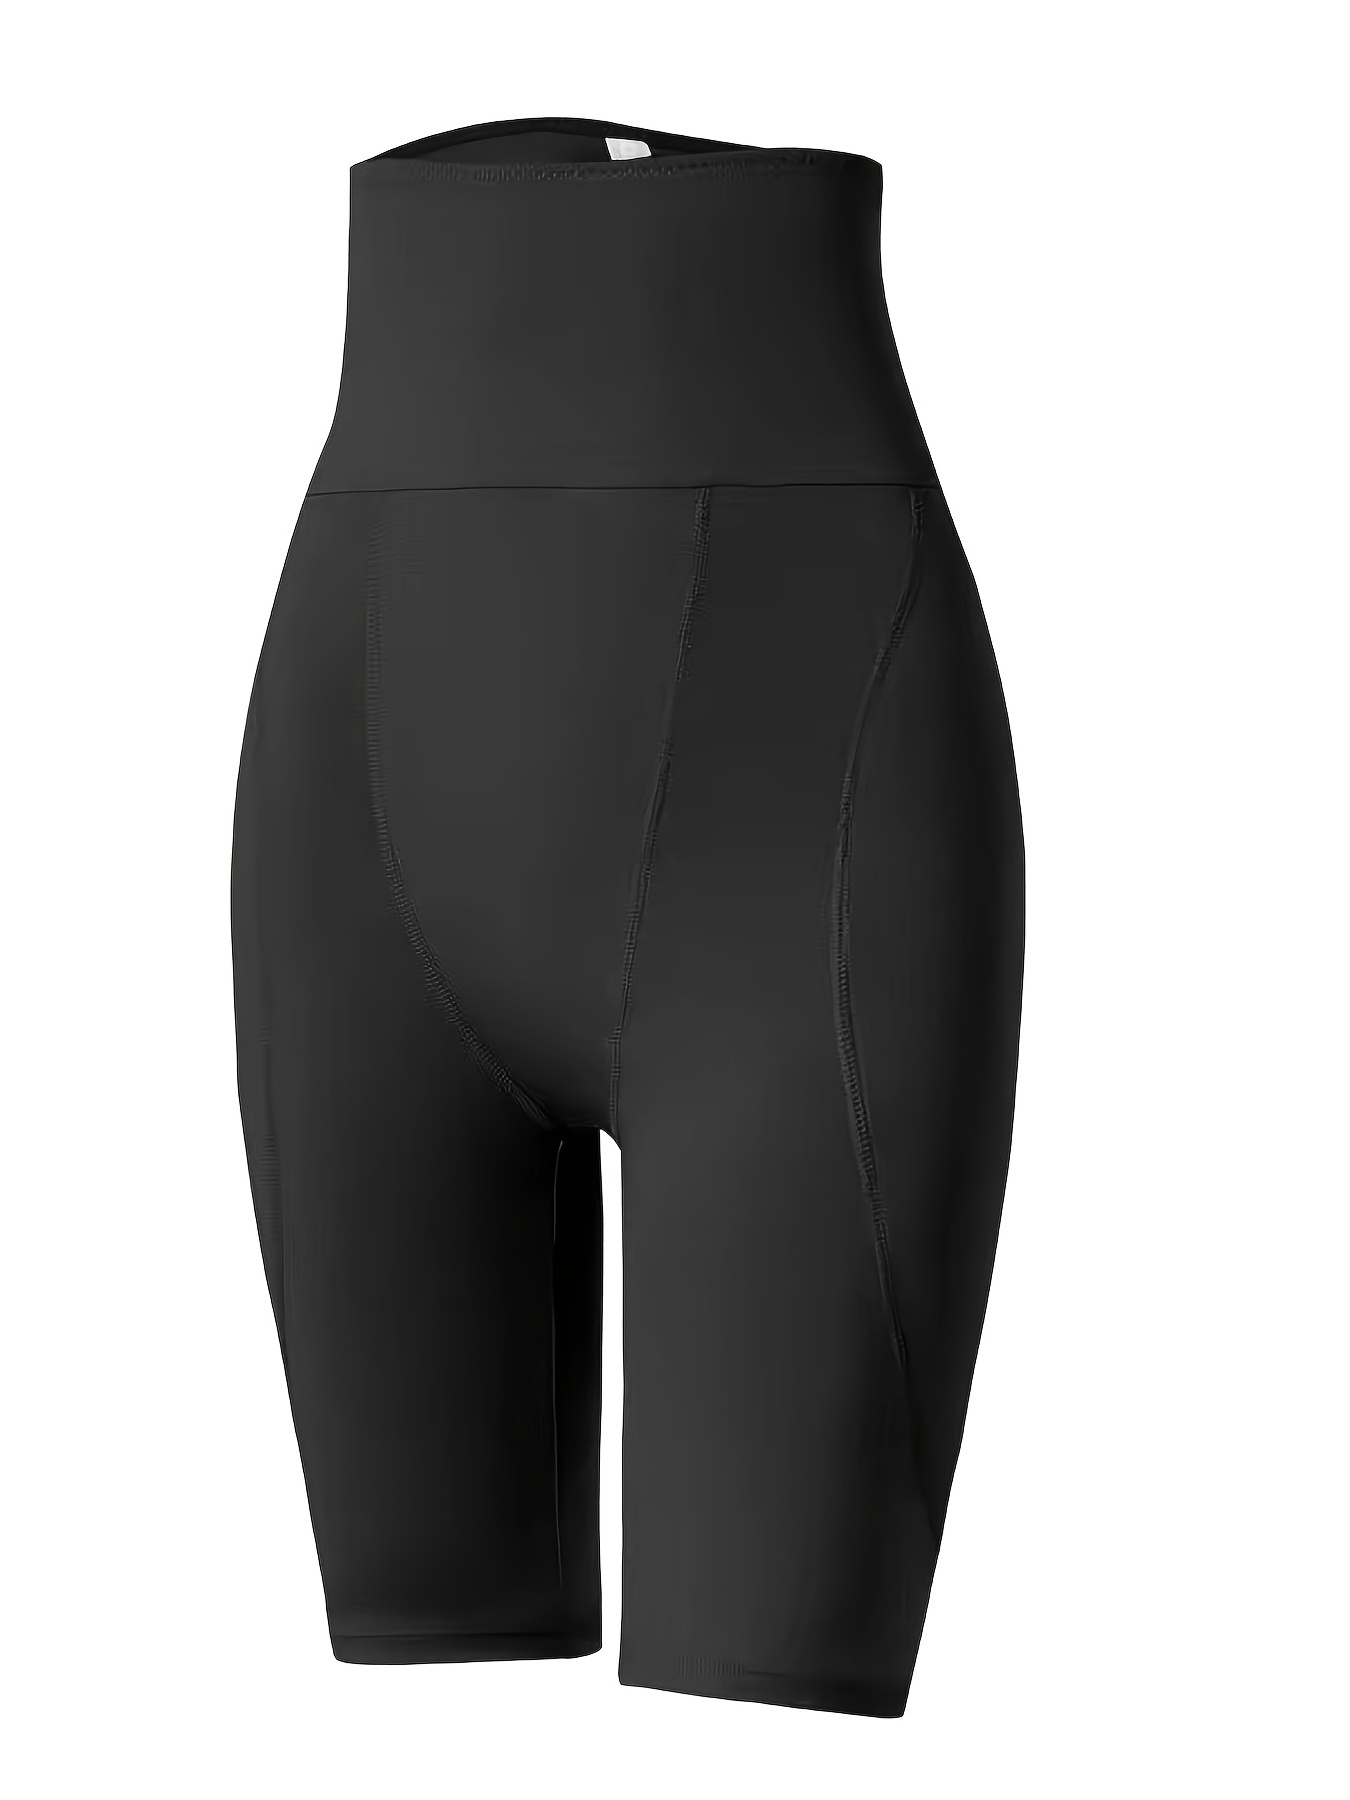 MERYOSZ Butt Lifter for Women Thigh Slimmer Shapewear High Waist Trainer  Panties Tummy Control Body Shaper Compression Shorts (Black, XL) in Kuwait